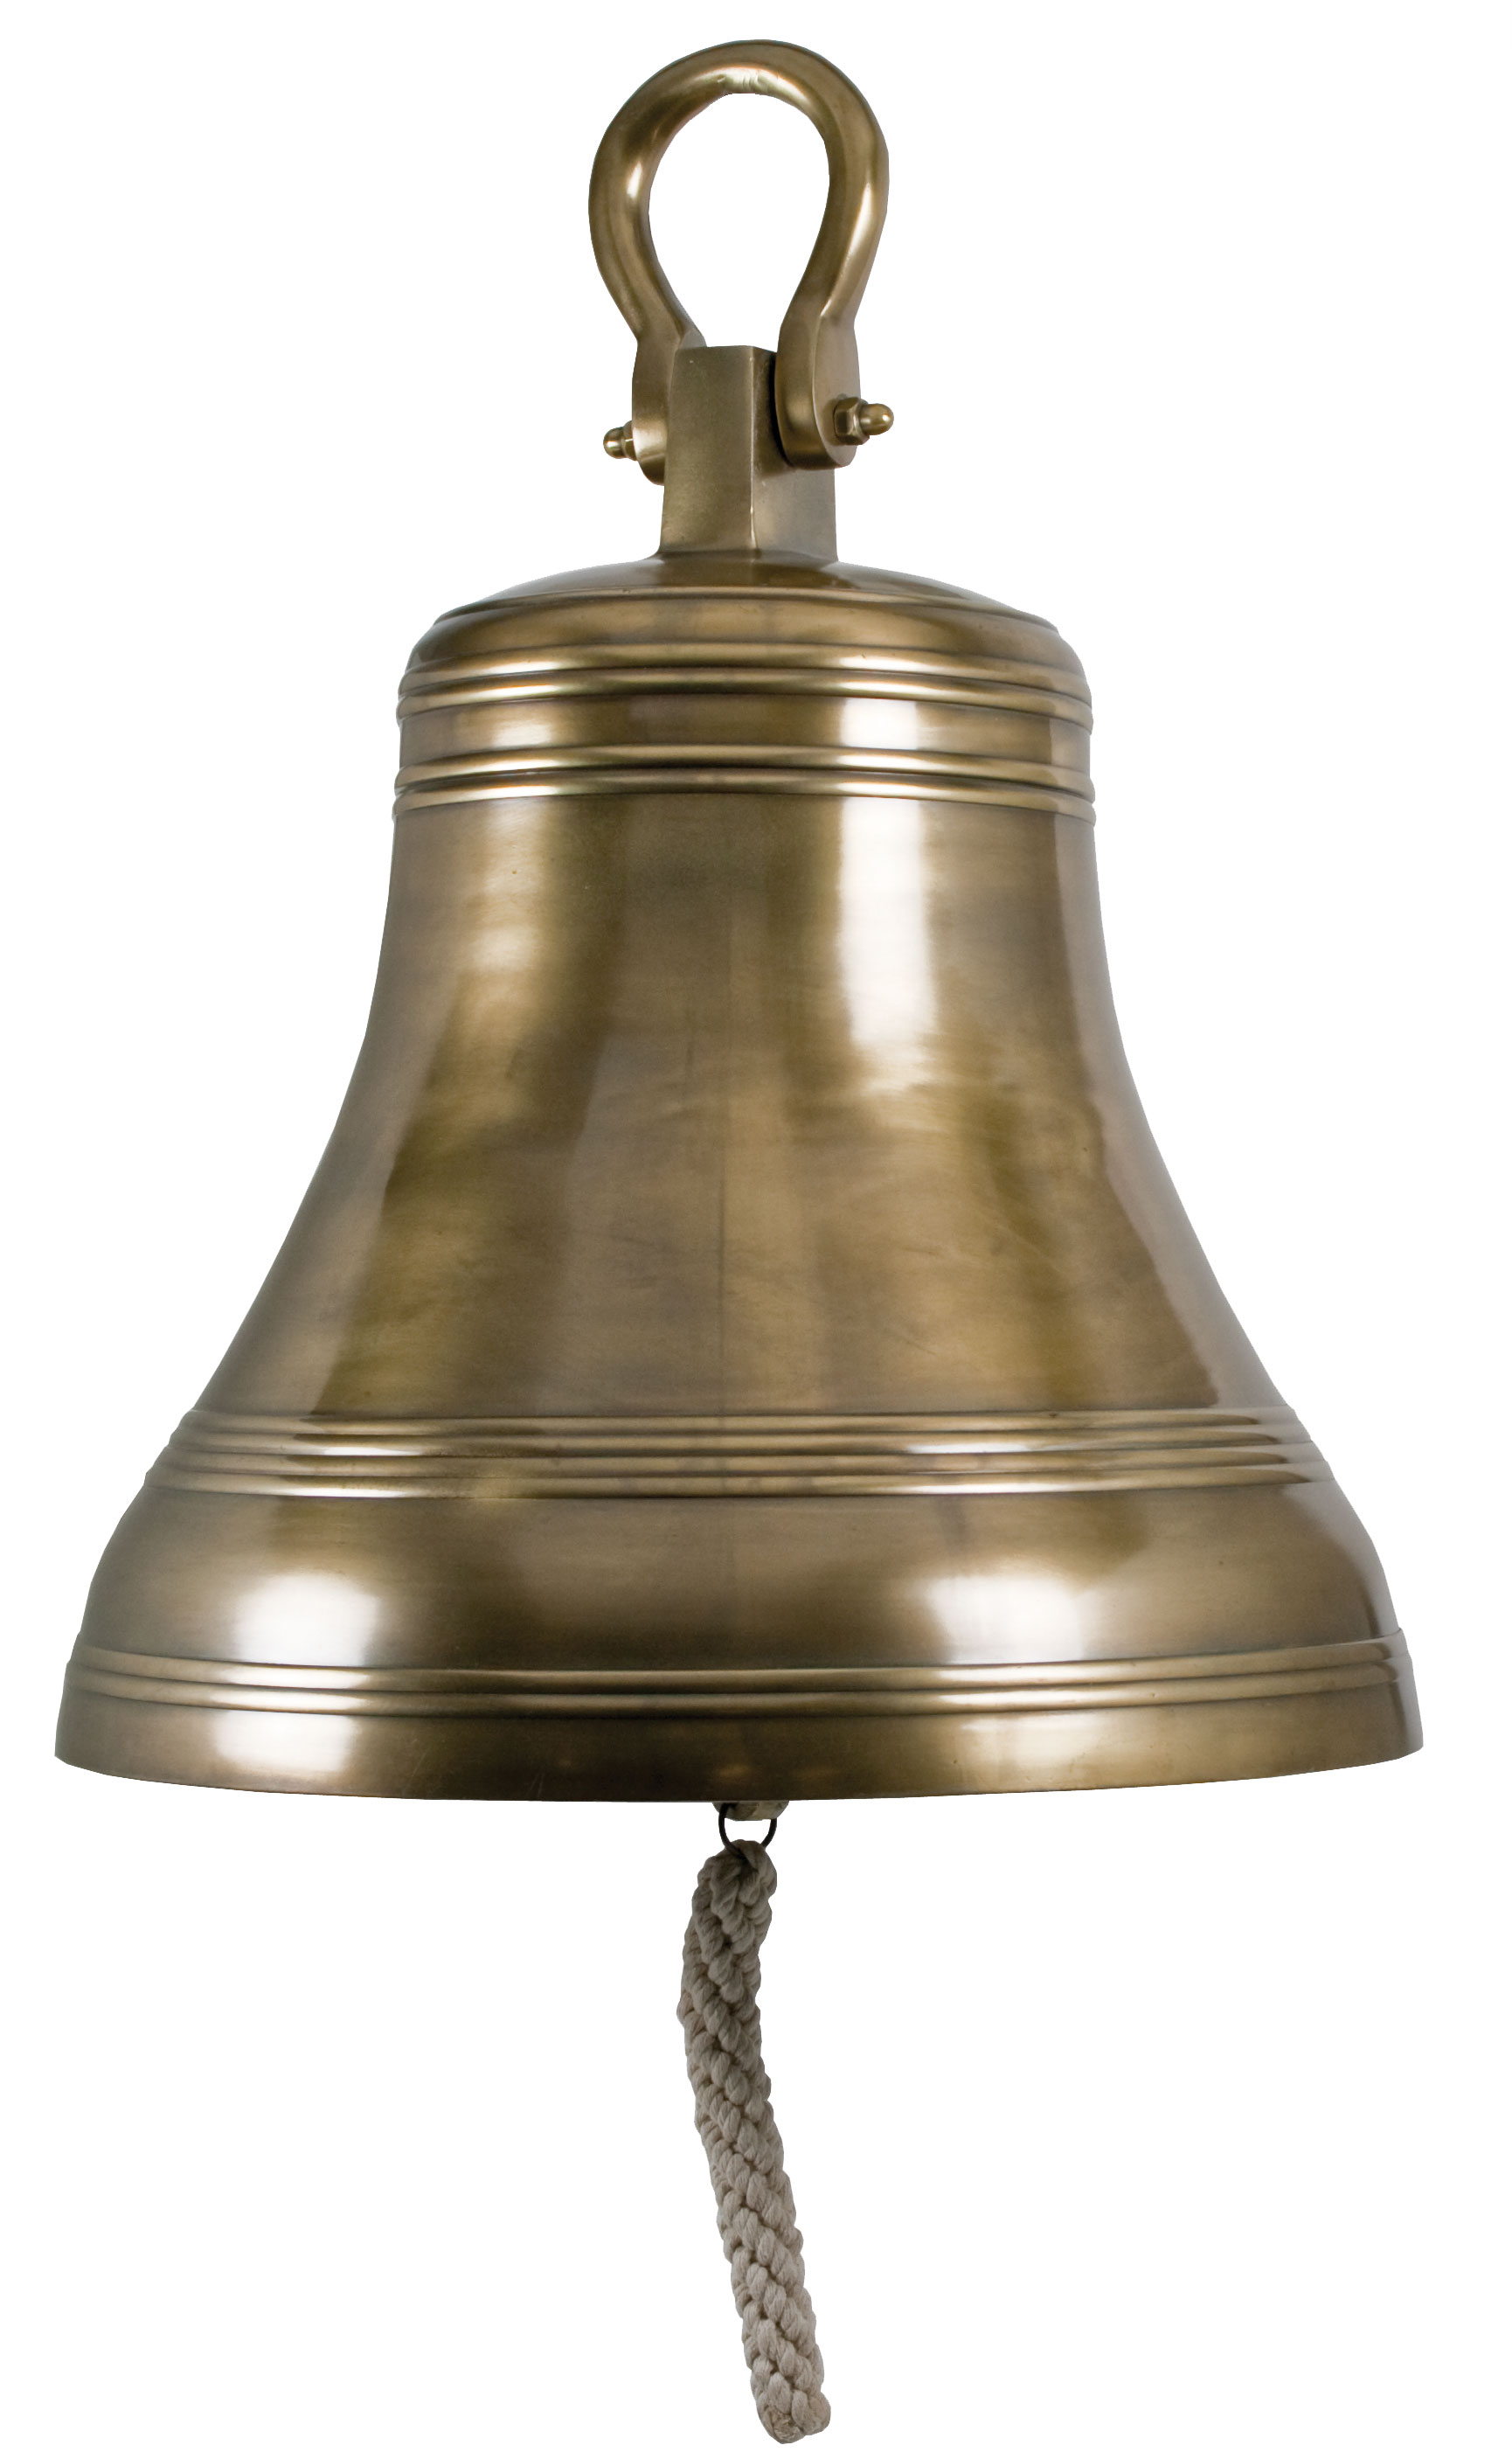 Vintage Ship's Bell